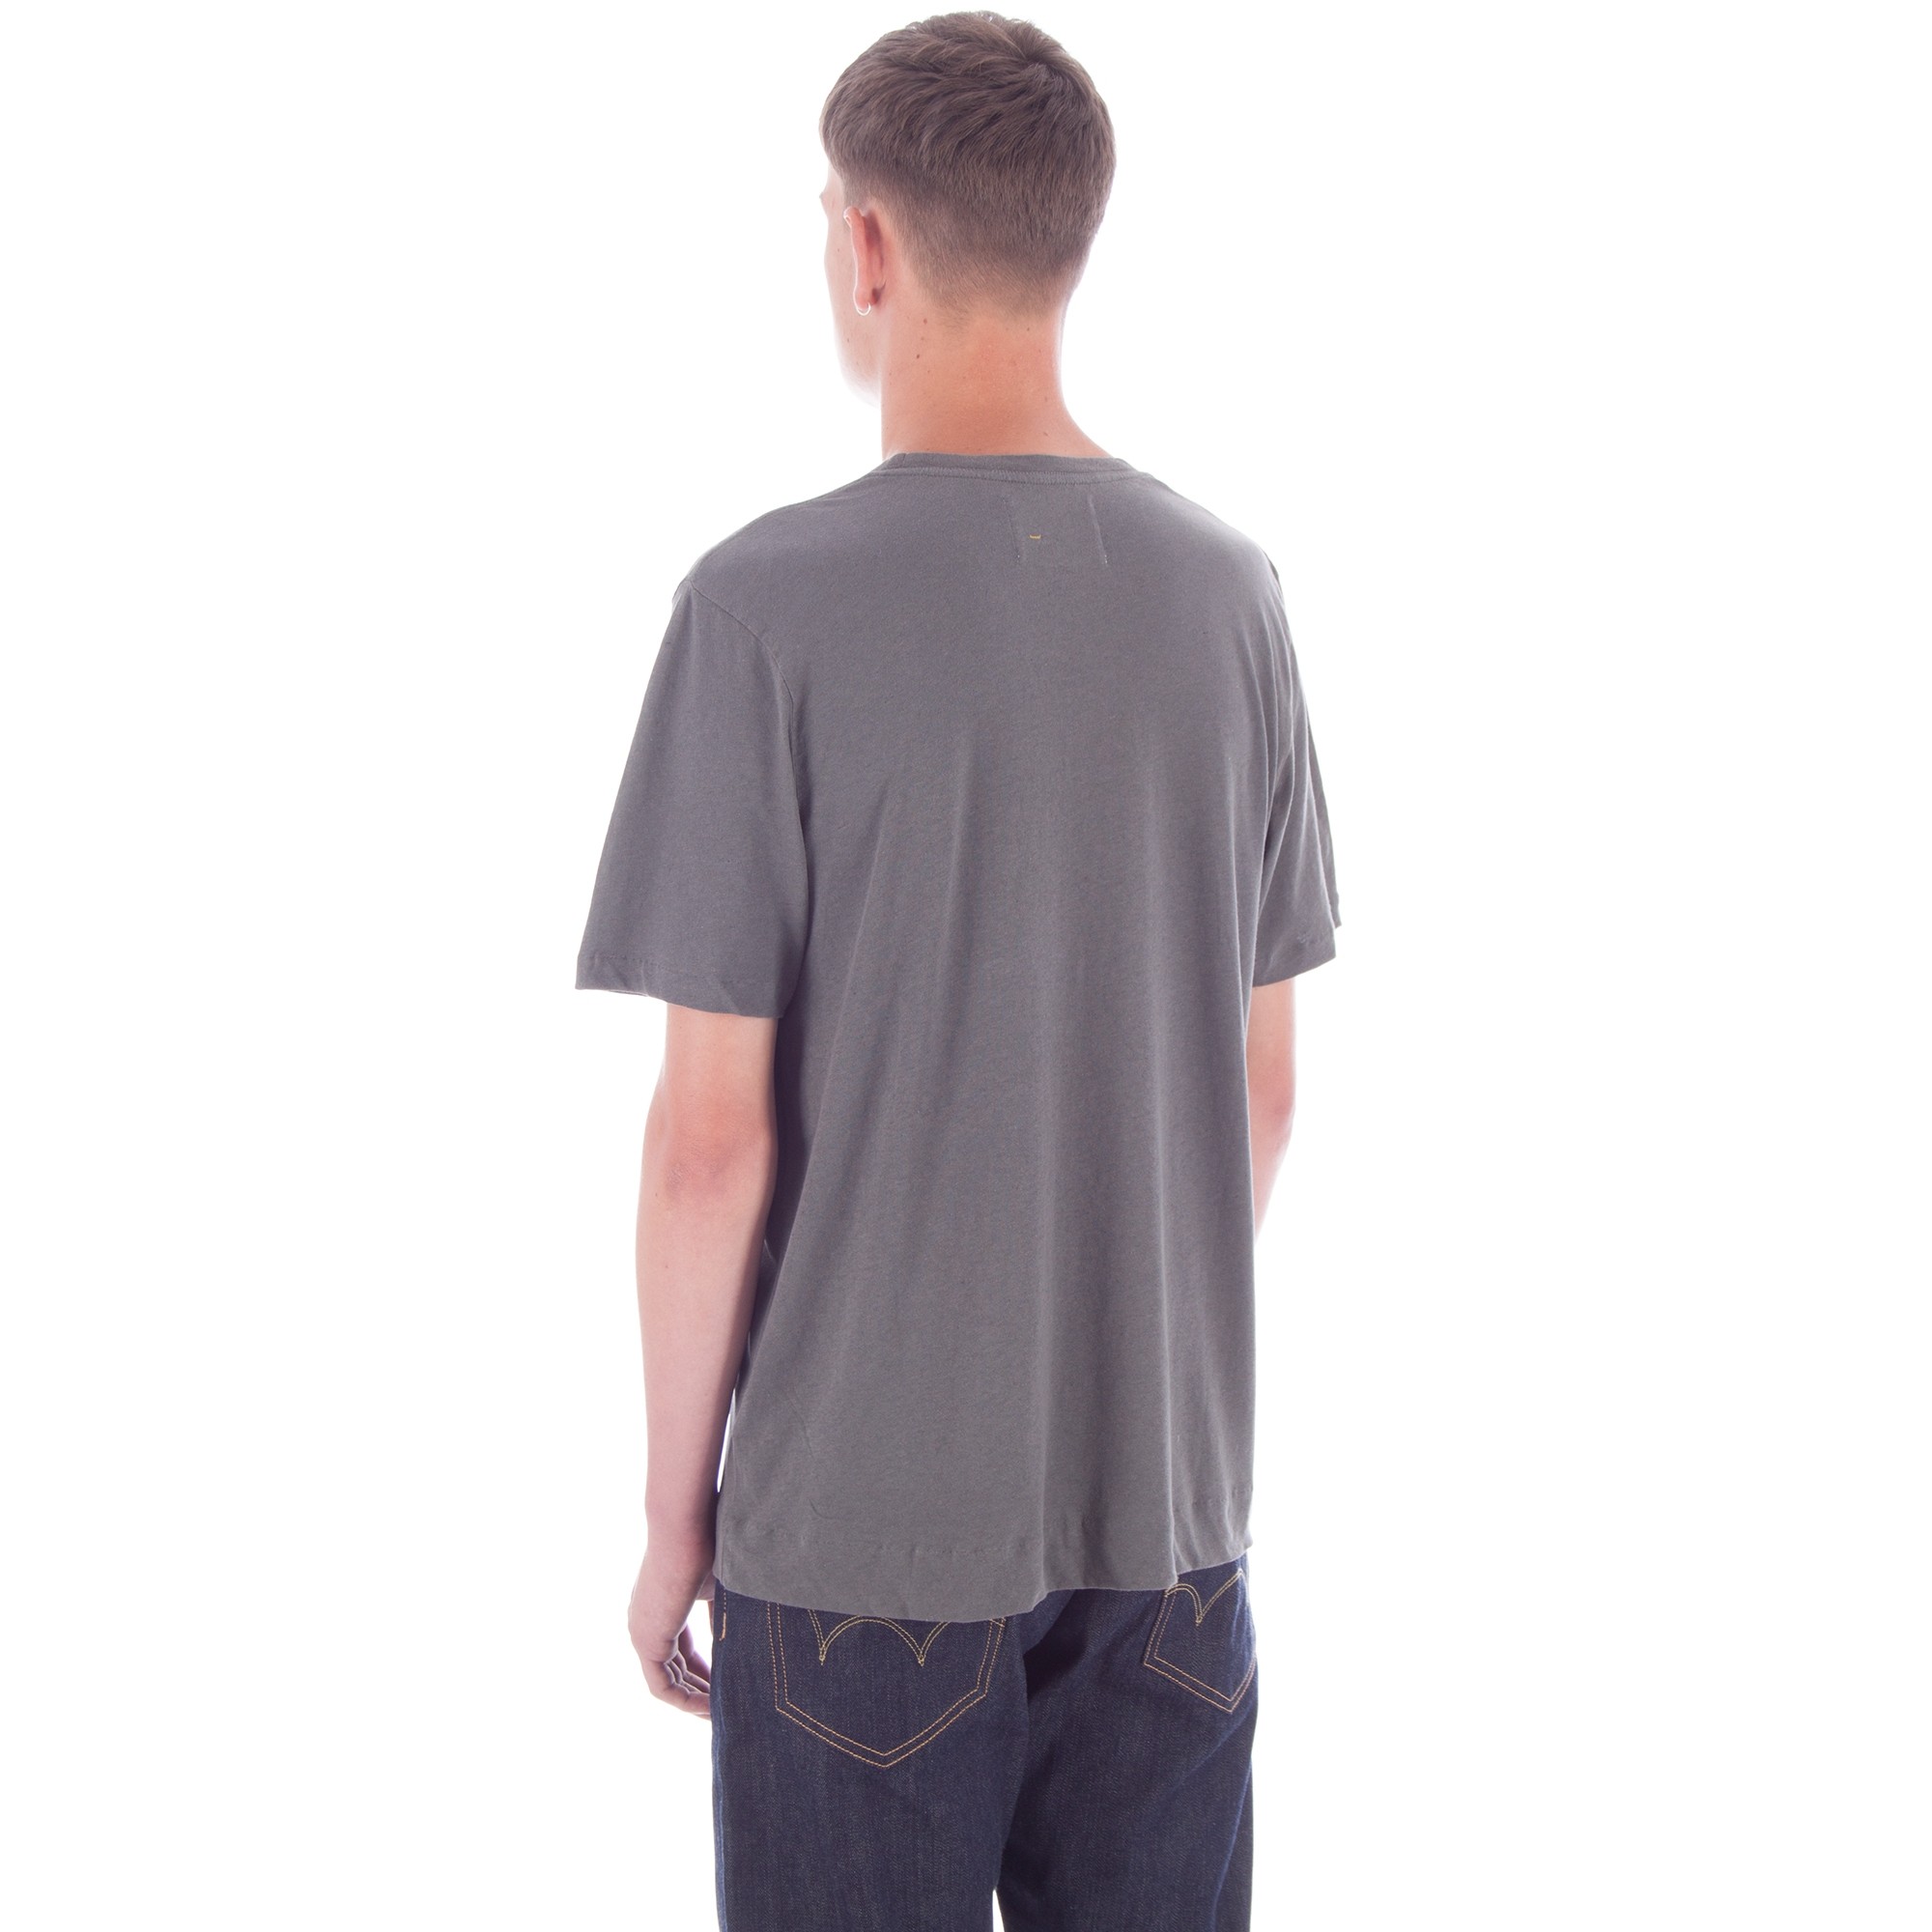 MHL by Margaret Howell Basic T-Shirt (Mid Grey) - Consortium.